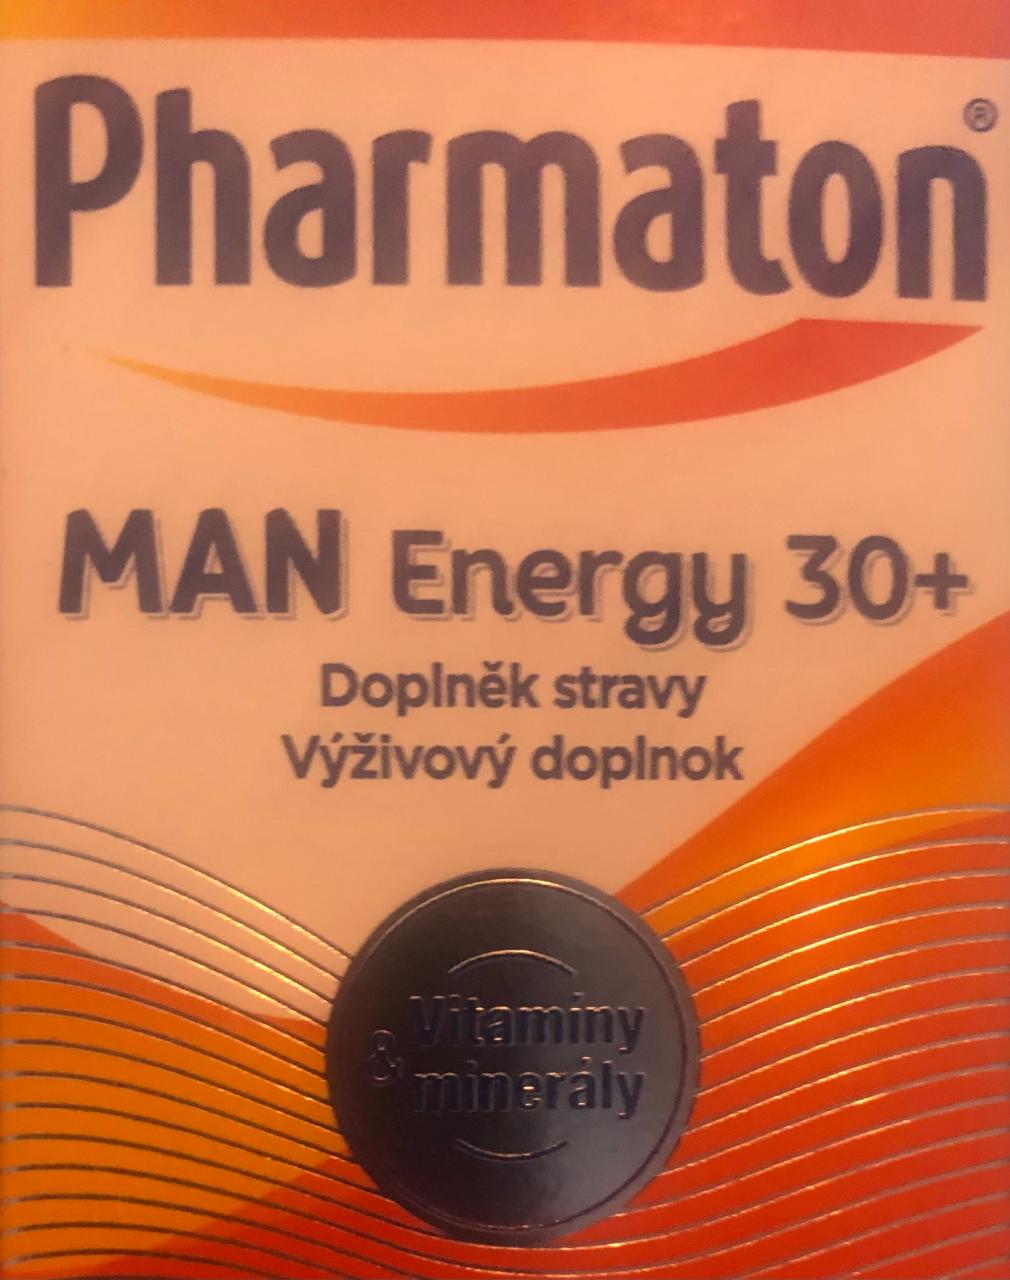 Fotografie - Pharmaton MAN Energy 30+